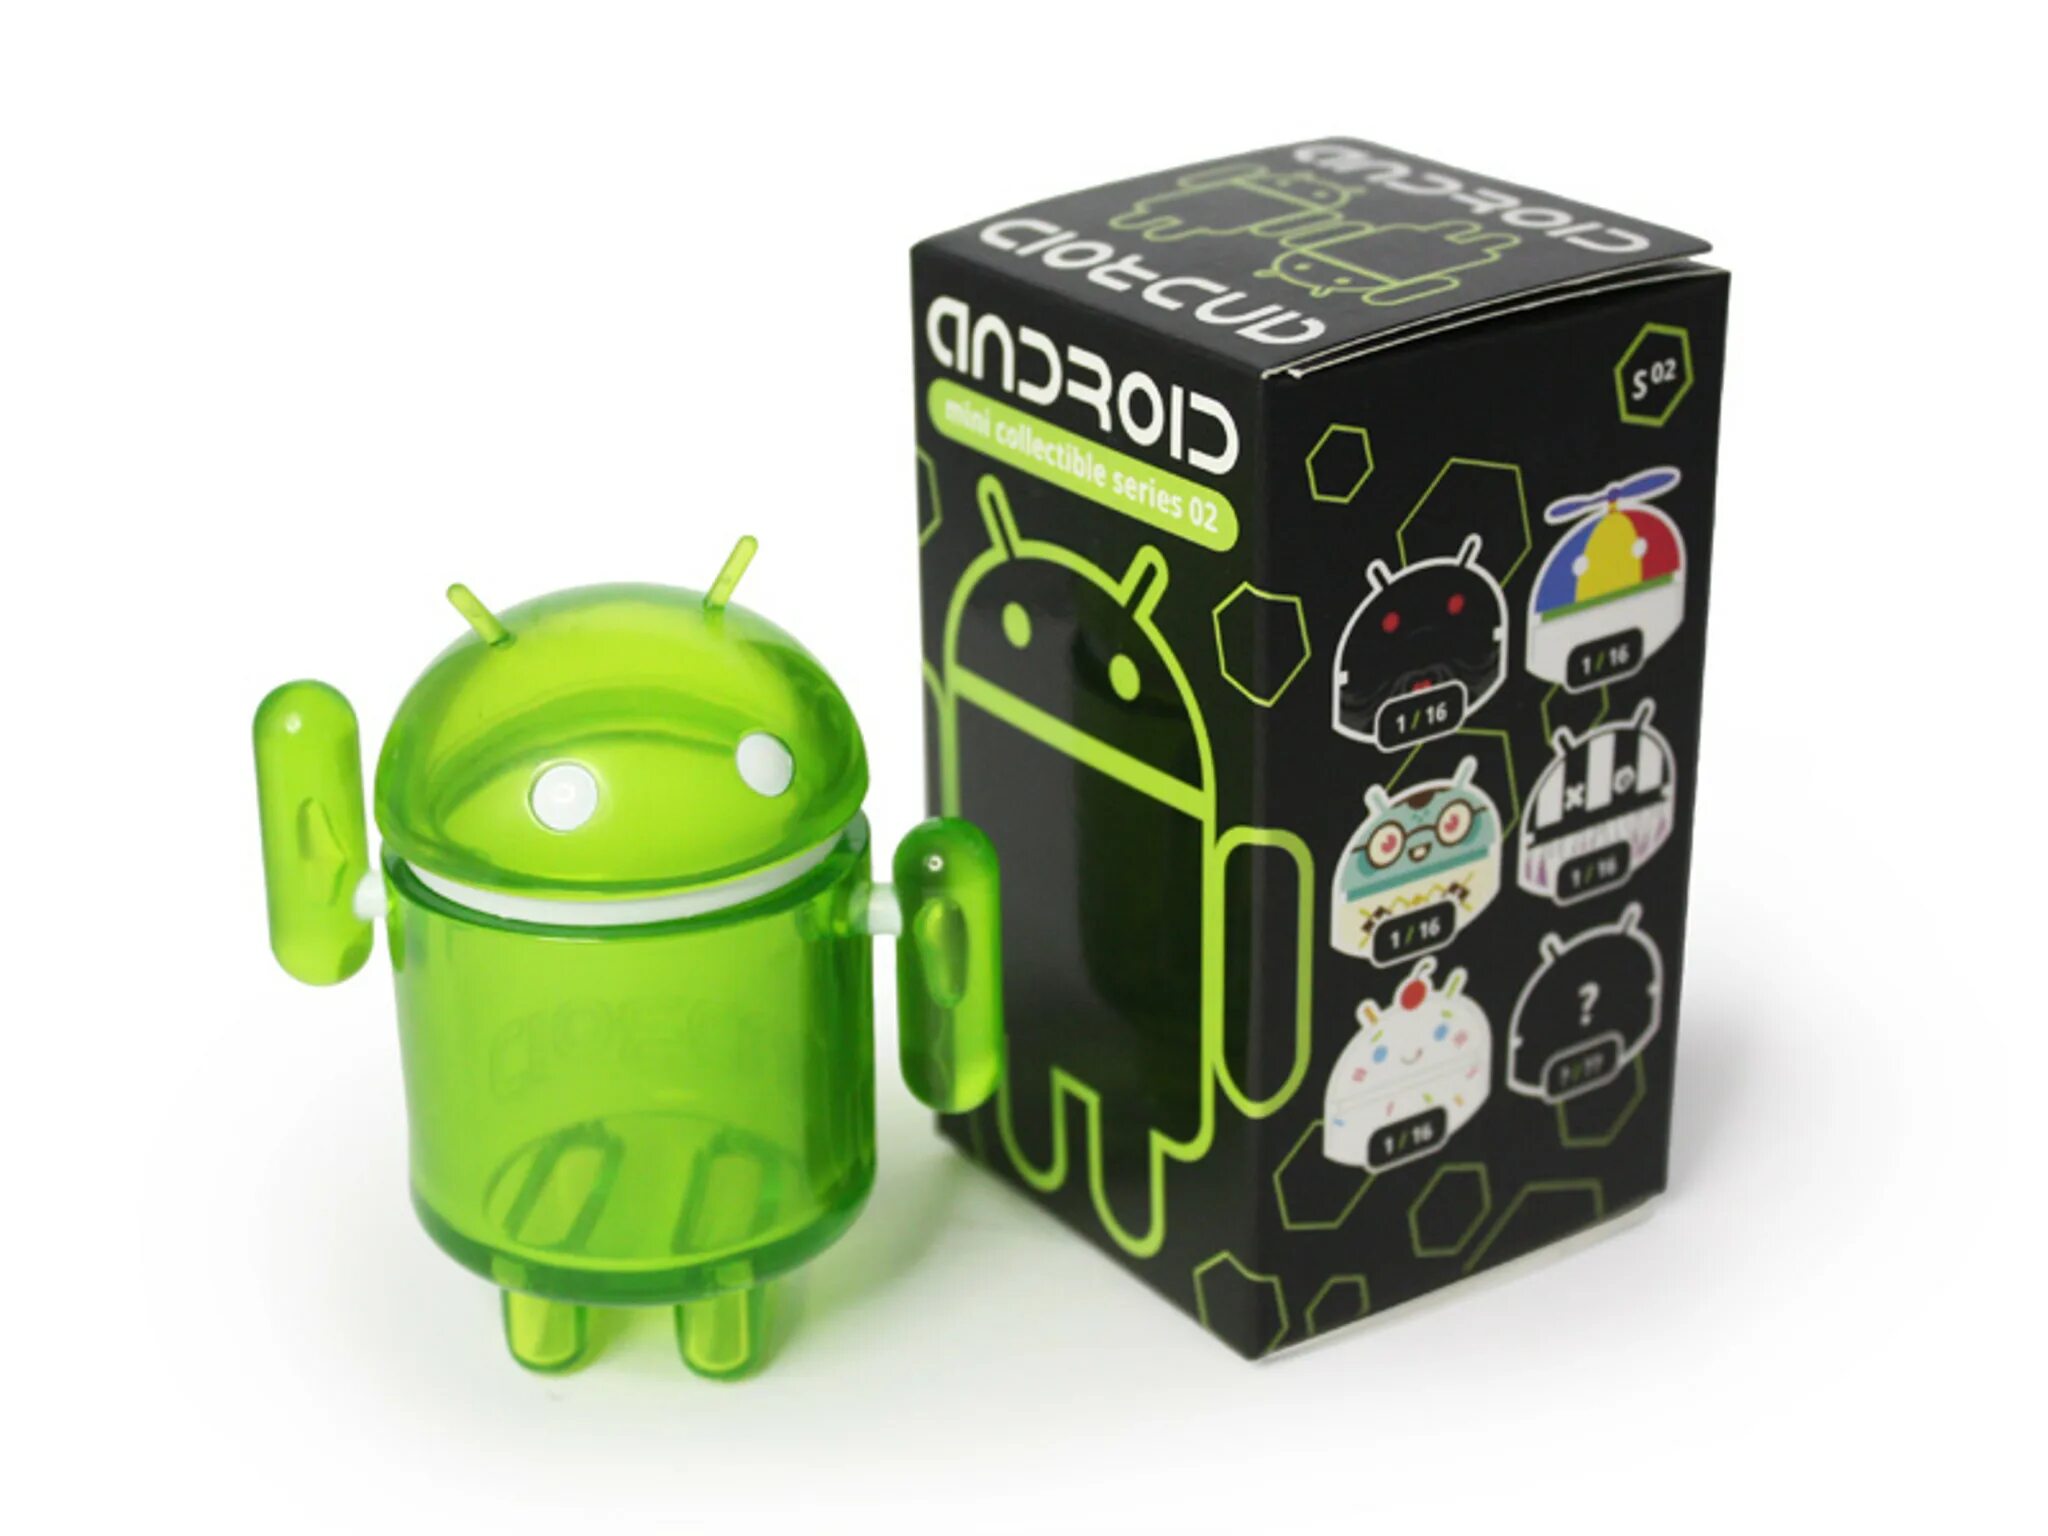 Toy android. Андроид игрушка. Робот андроид игрушка. Игрушка Android Collectible. Игрушка андроид зеленый робот.